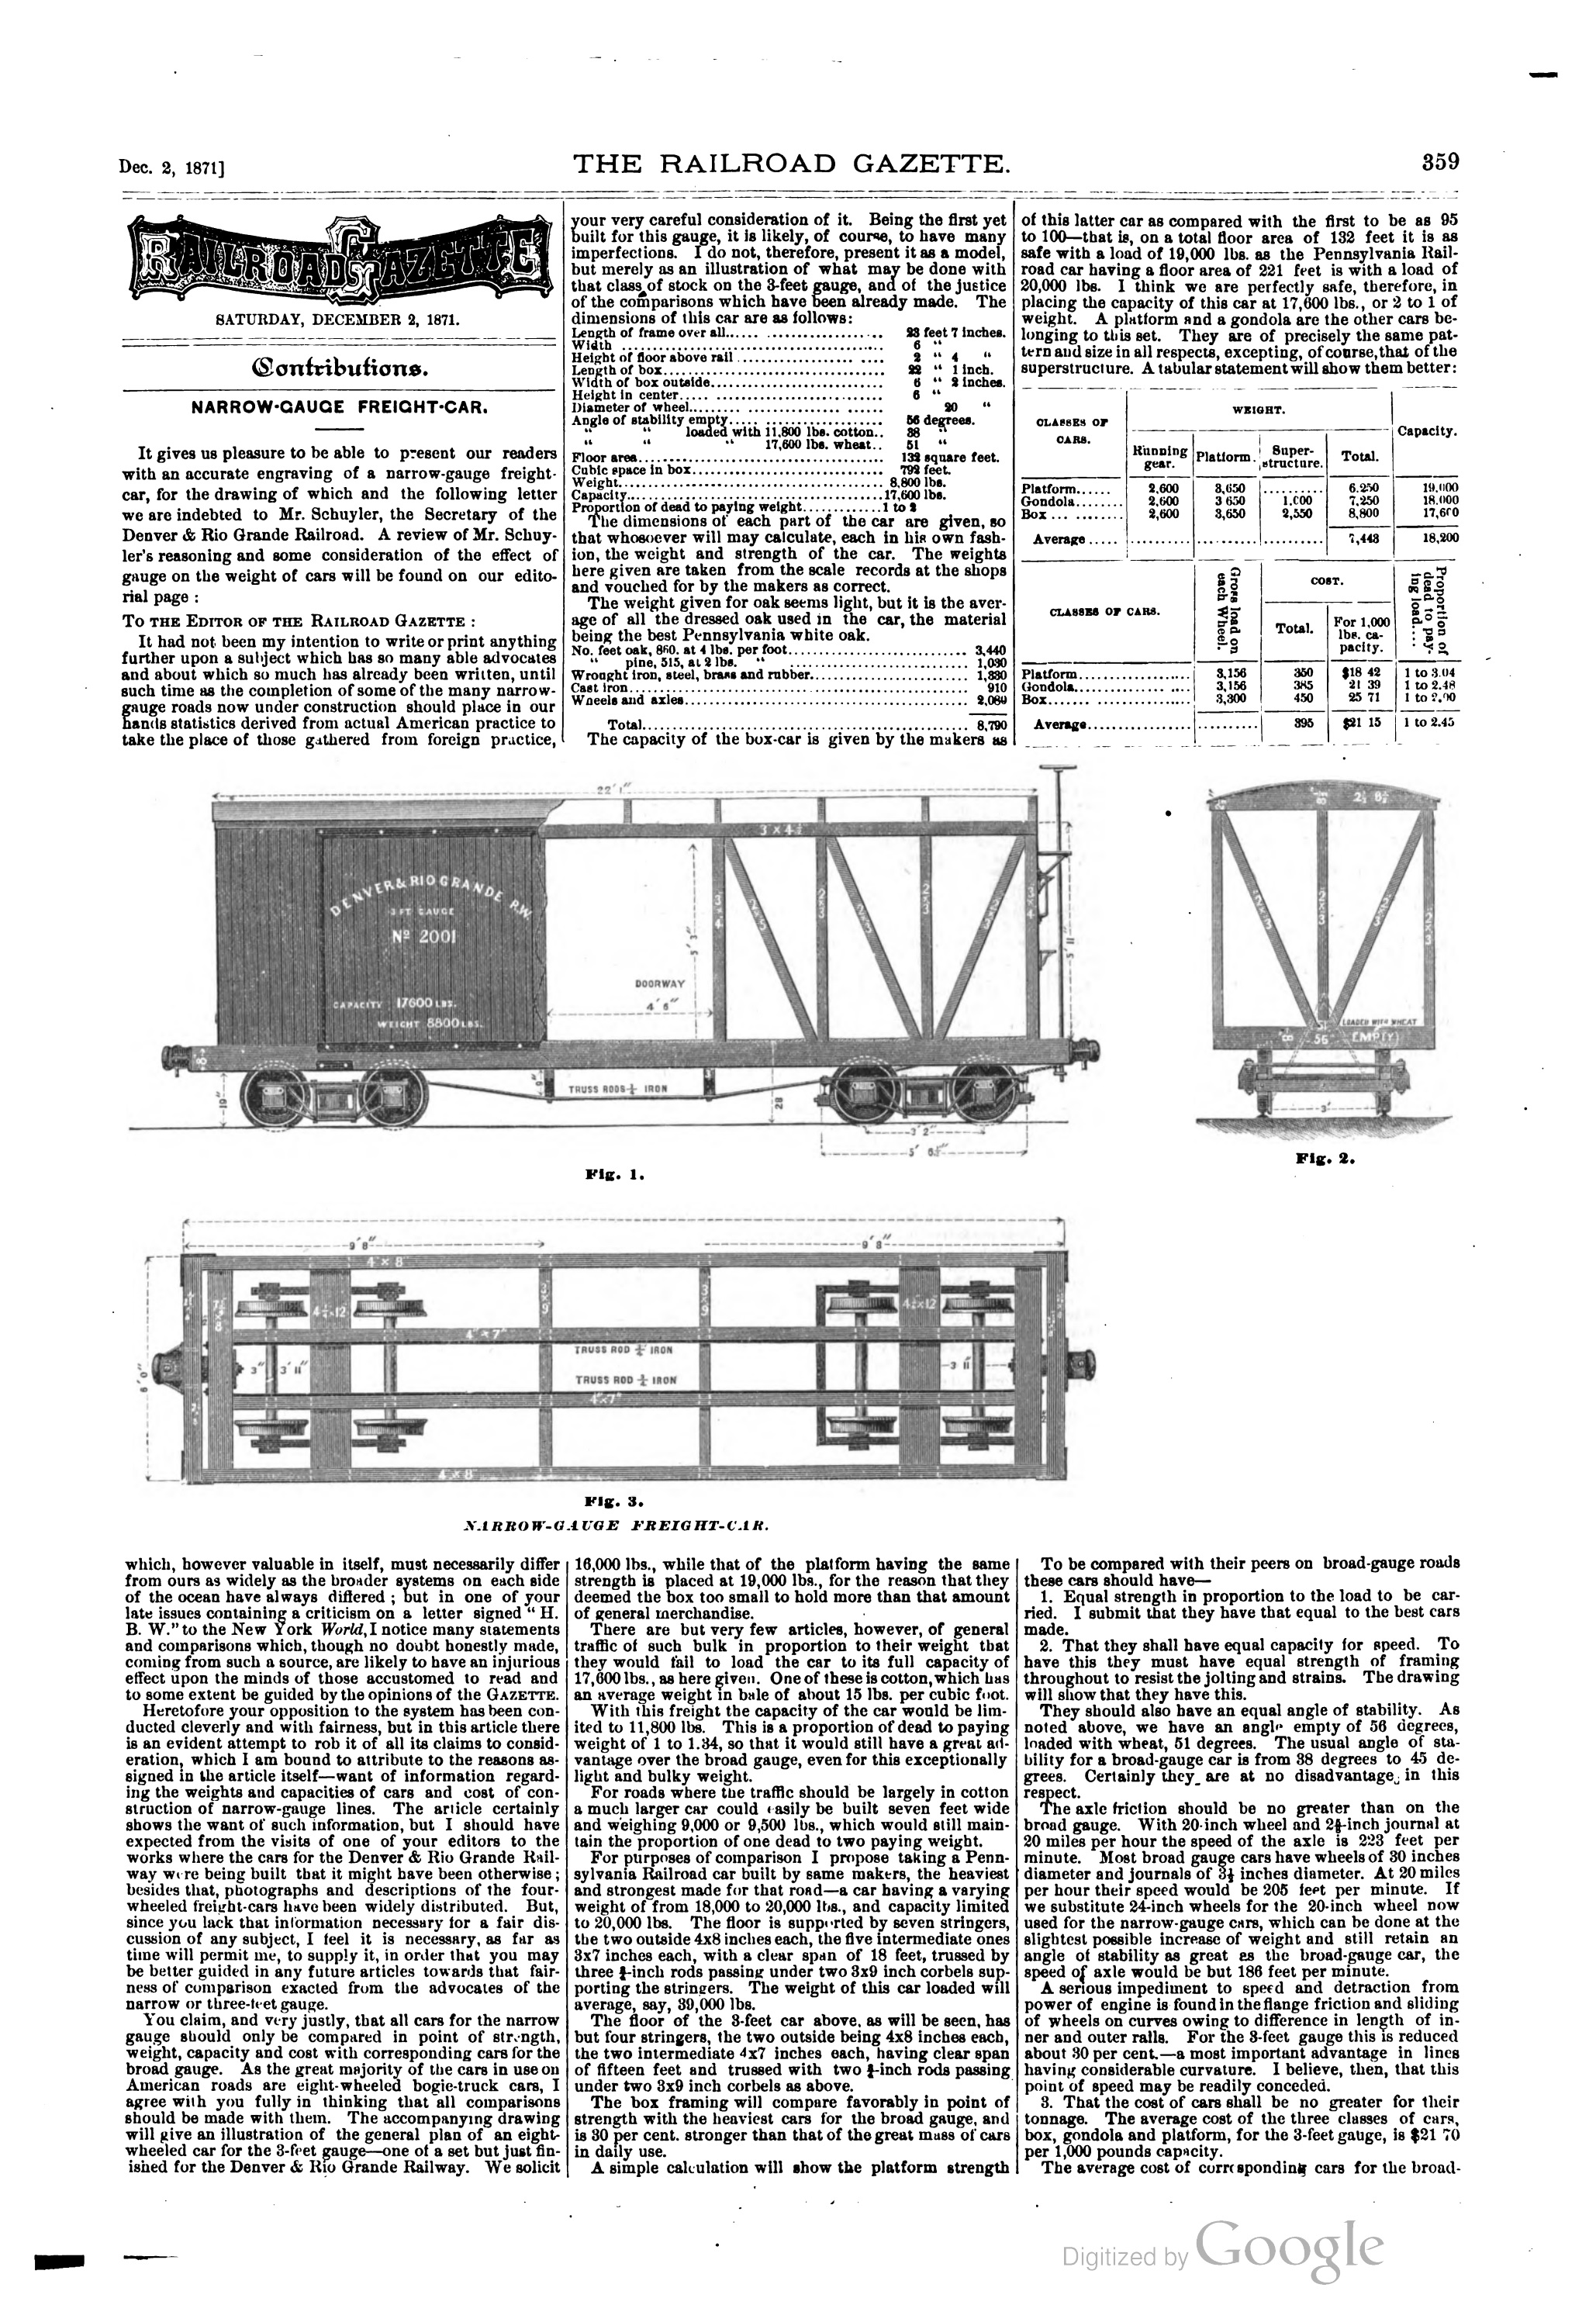 Narrow-Gauge Freight Cars 1871 1.jpg